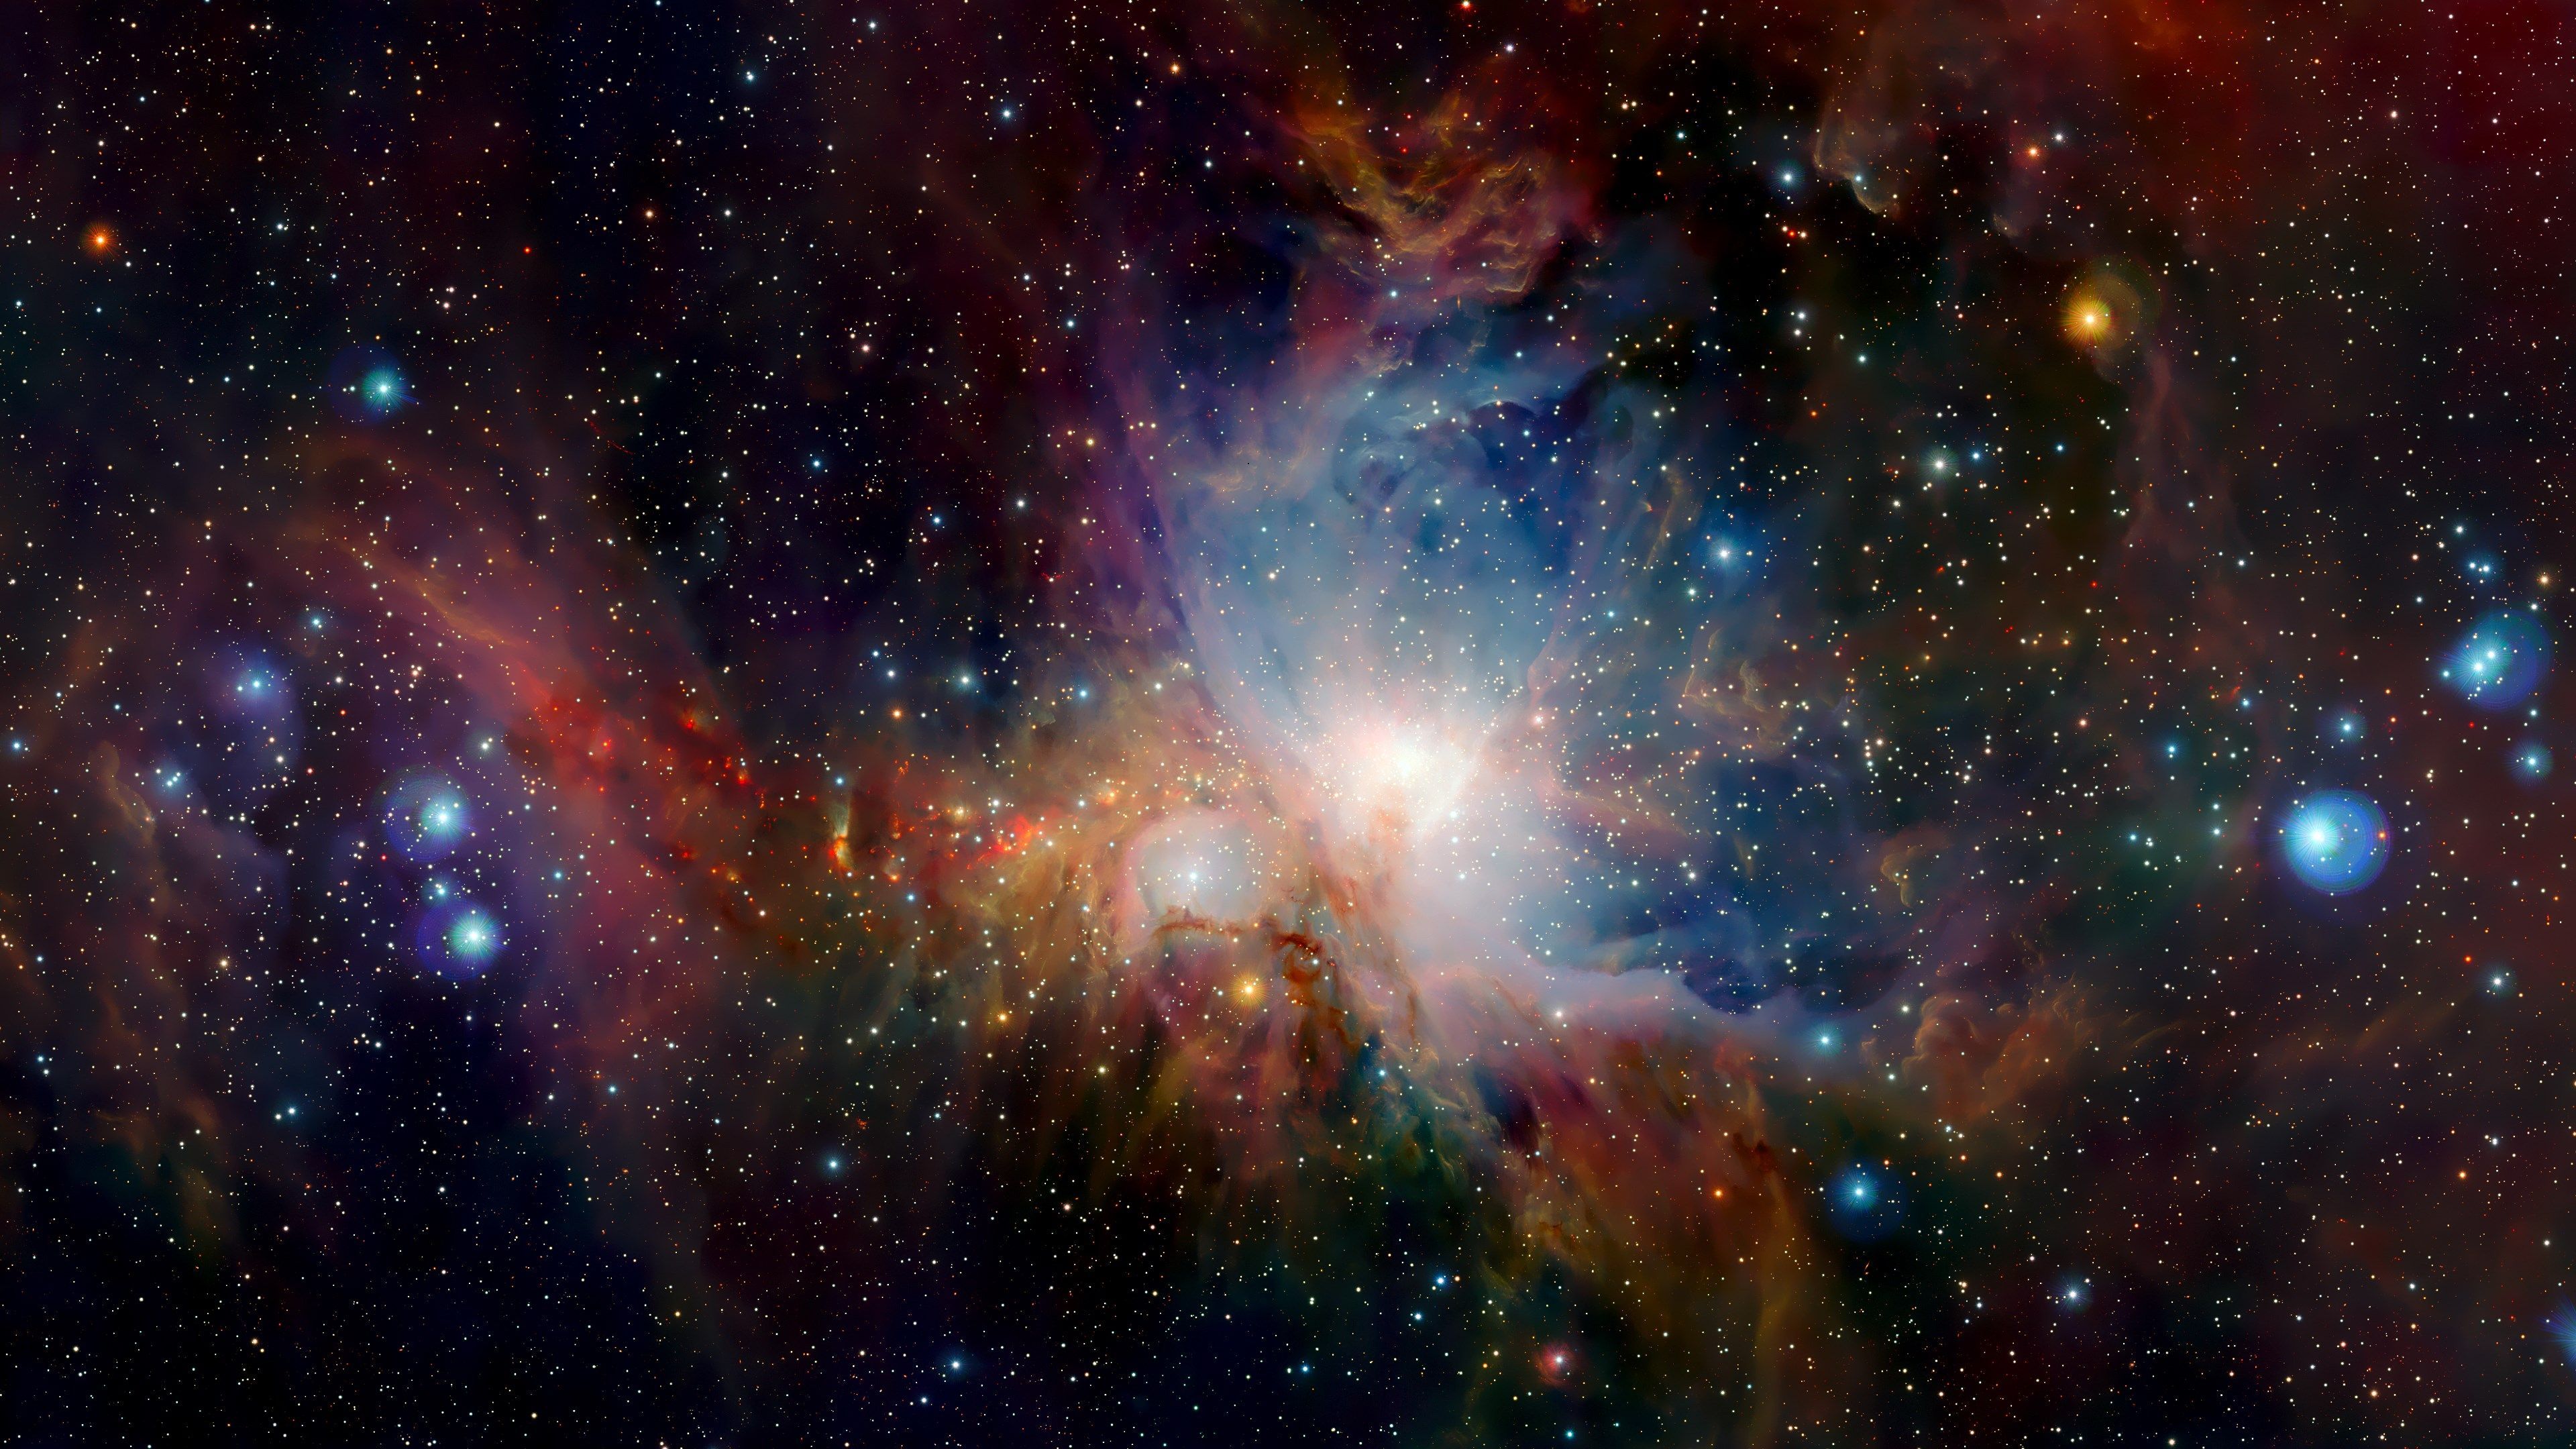 4k wallpaper download free for pc HD (3840x2160). Nebula wallpaper, Orion nebula, Nebula